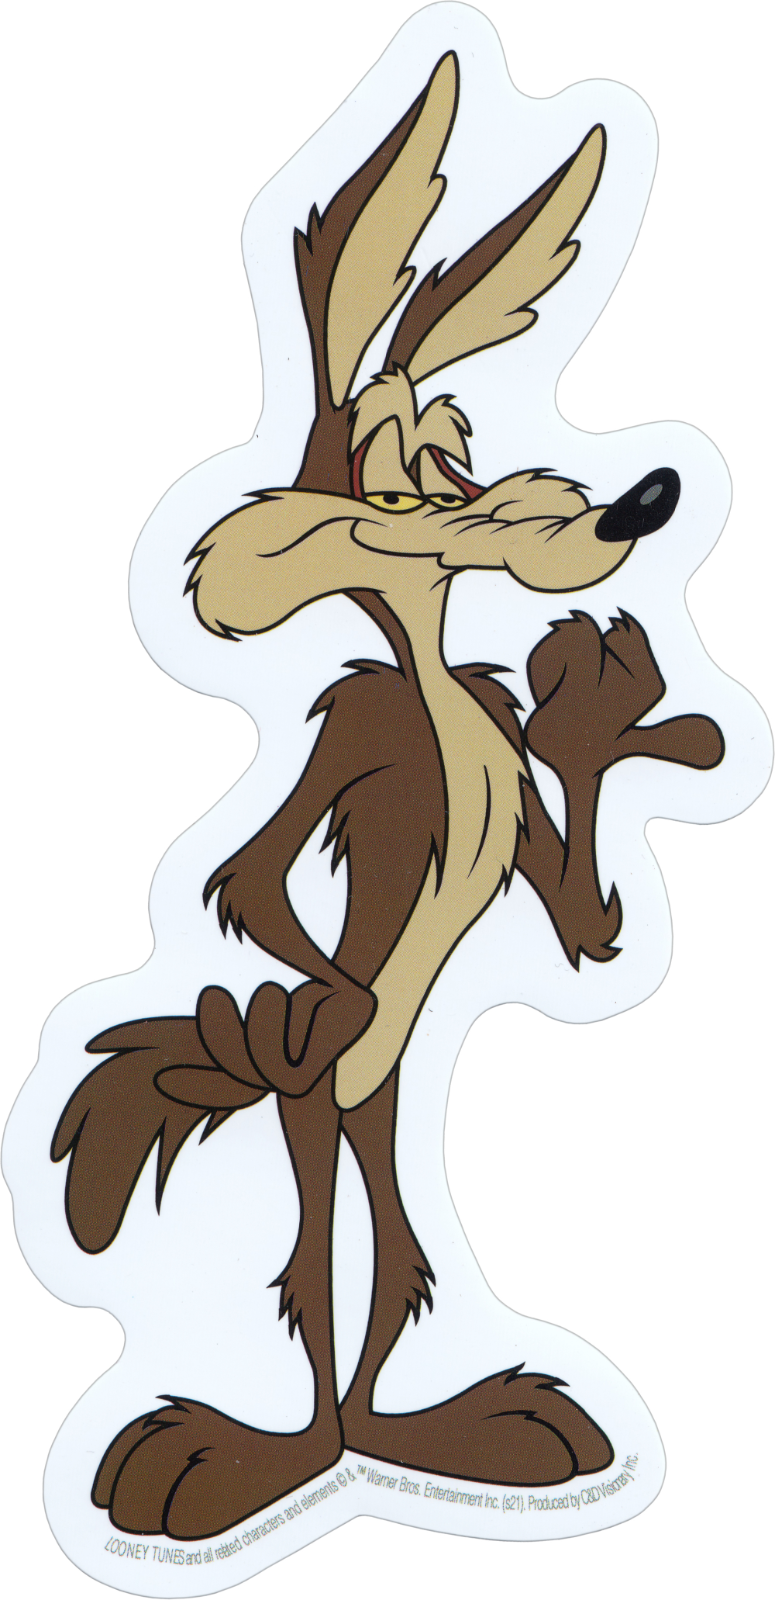 Sticker - Wile E Coyote Looney Tunes Roadrunner Classic Cartoon 